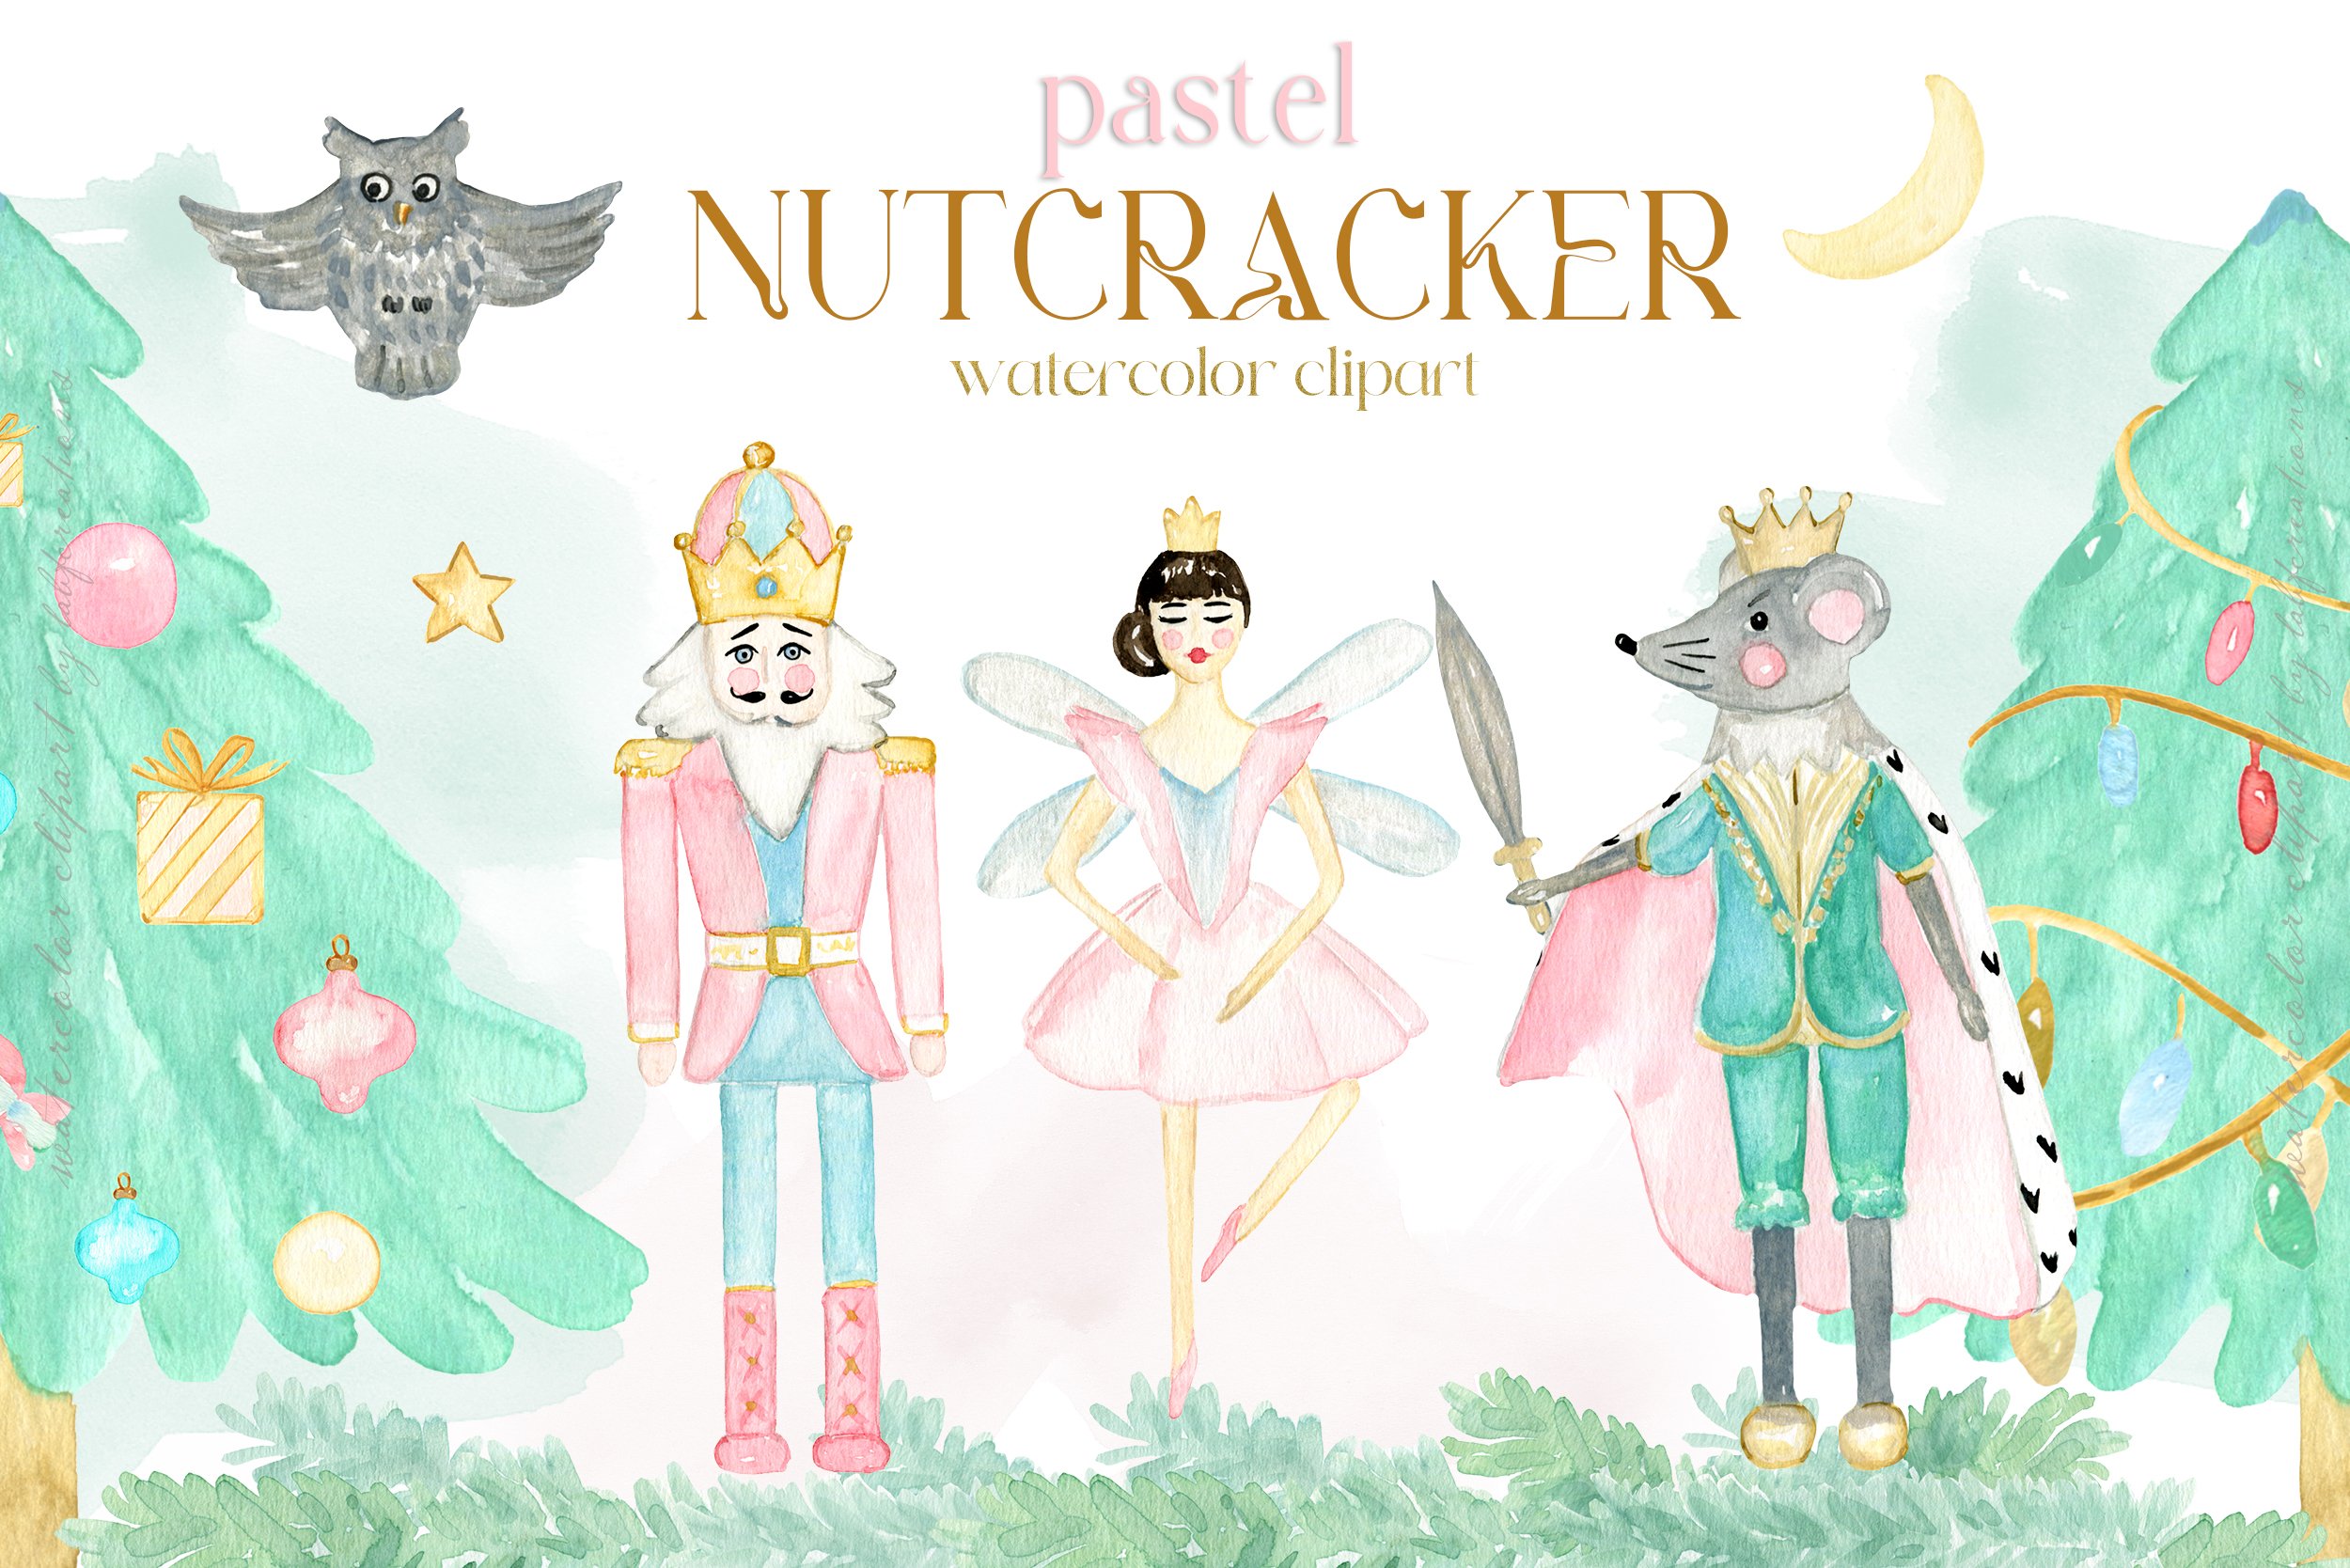 Nutcracker Pastel Christmas preview image.